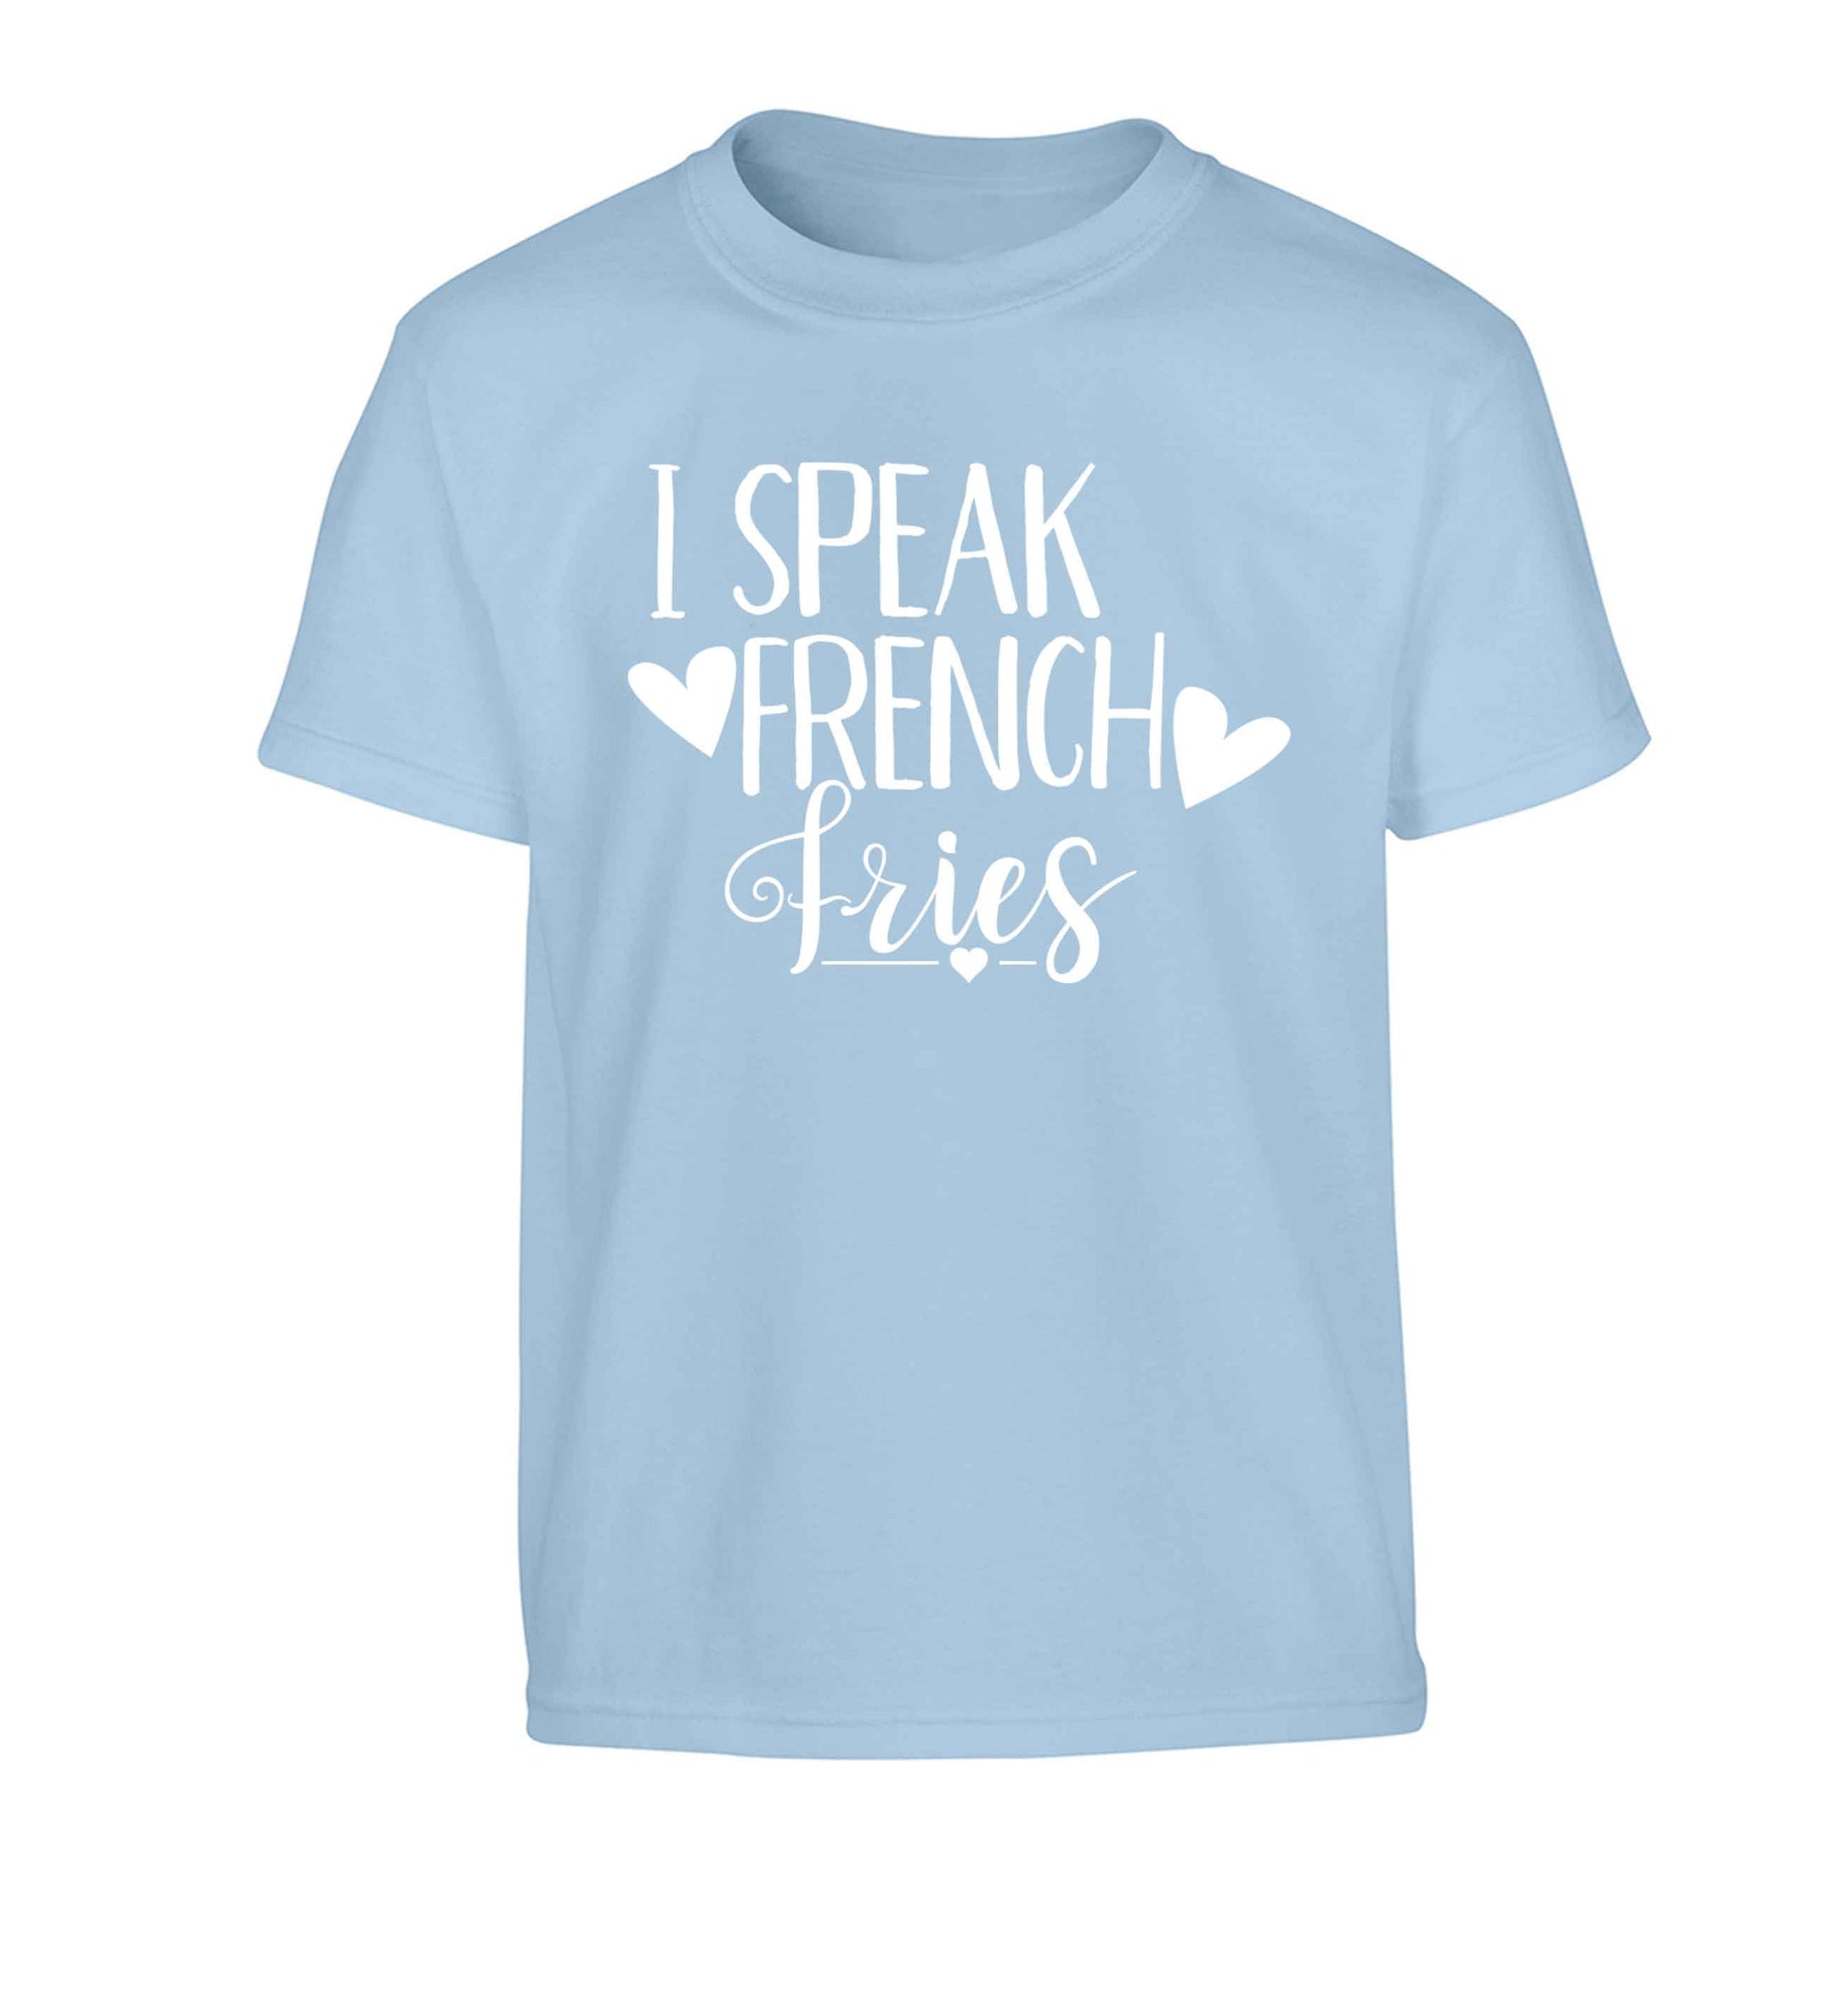 I speak French fries Children's light blue Tshirt 12-13 Years